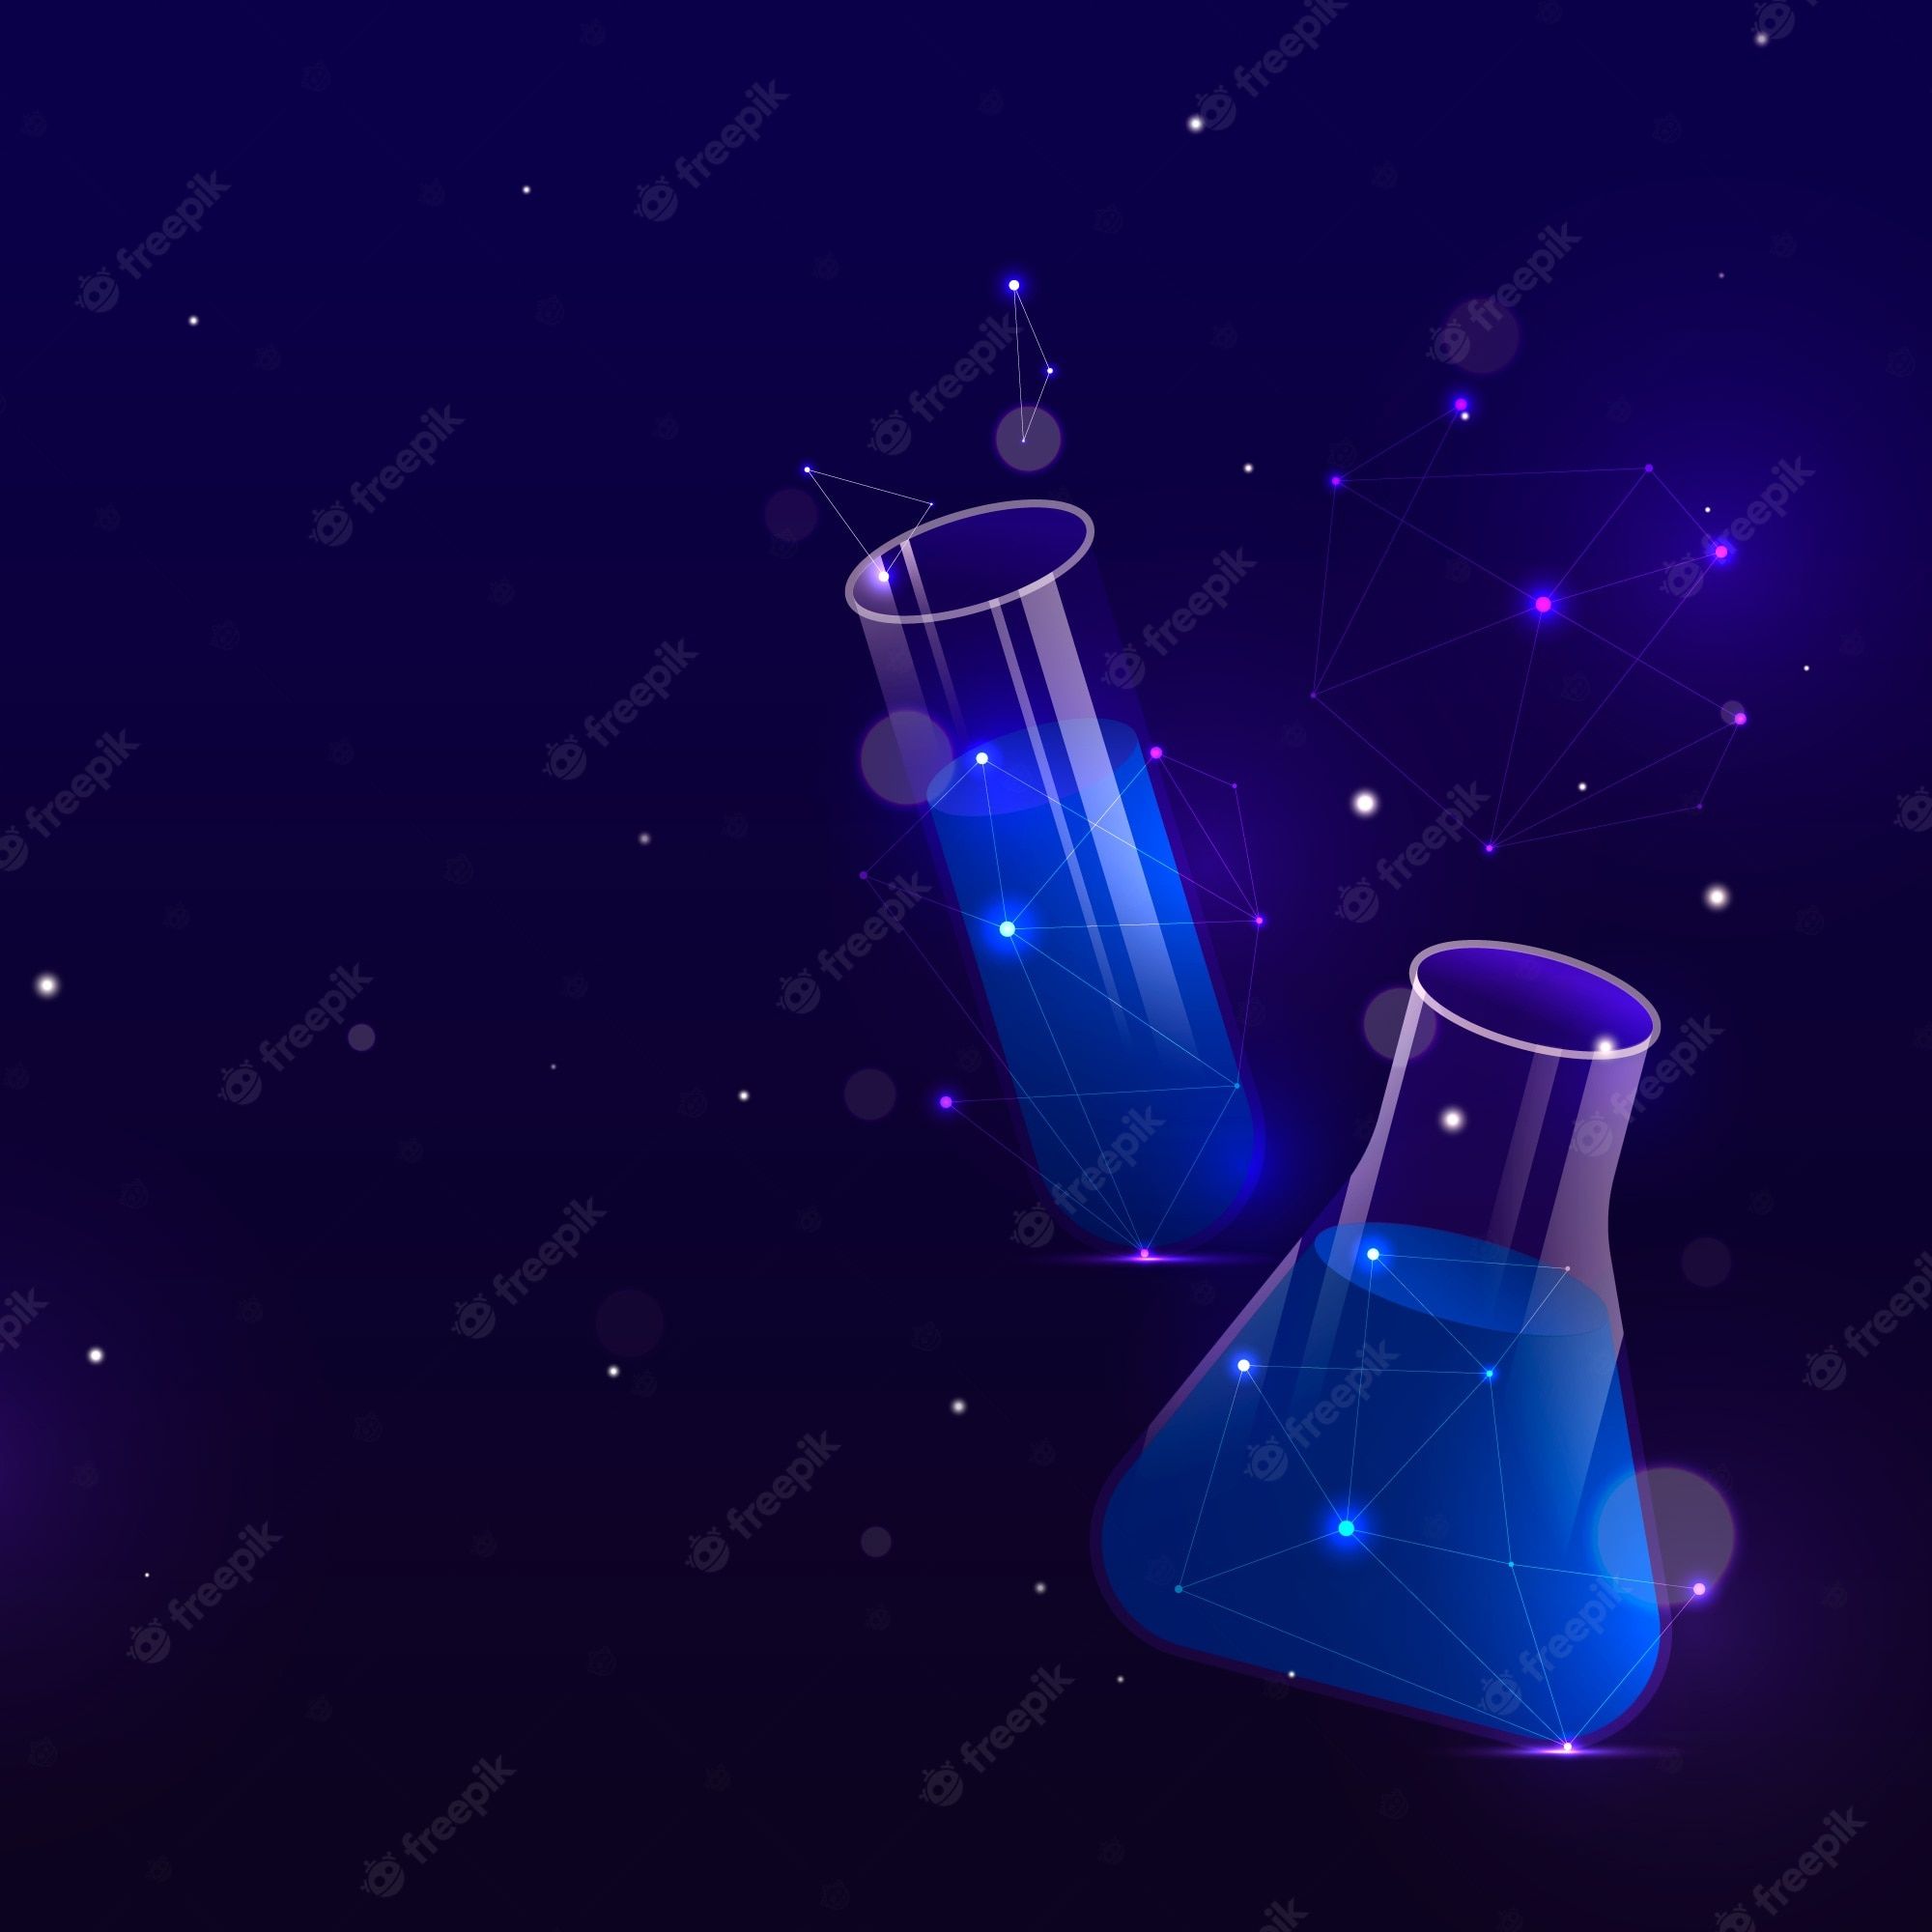 Chemistry Background Image